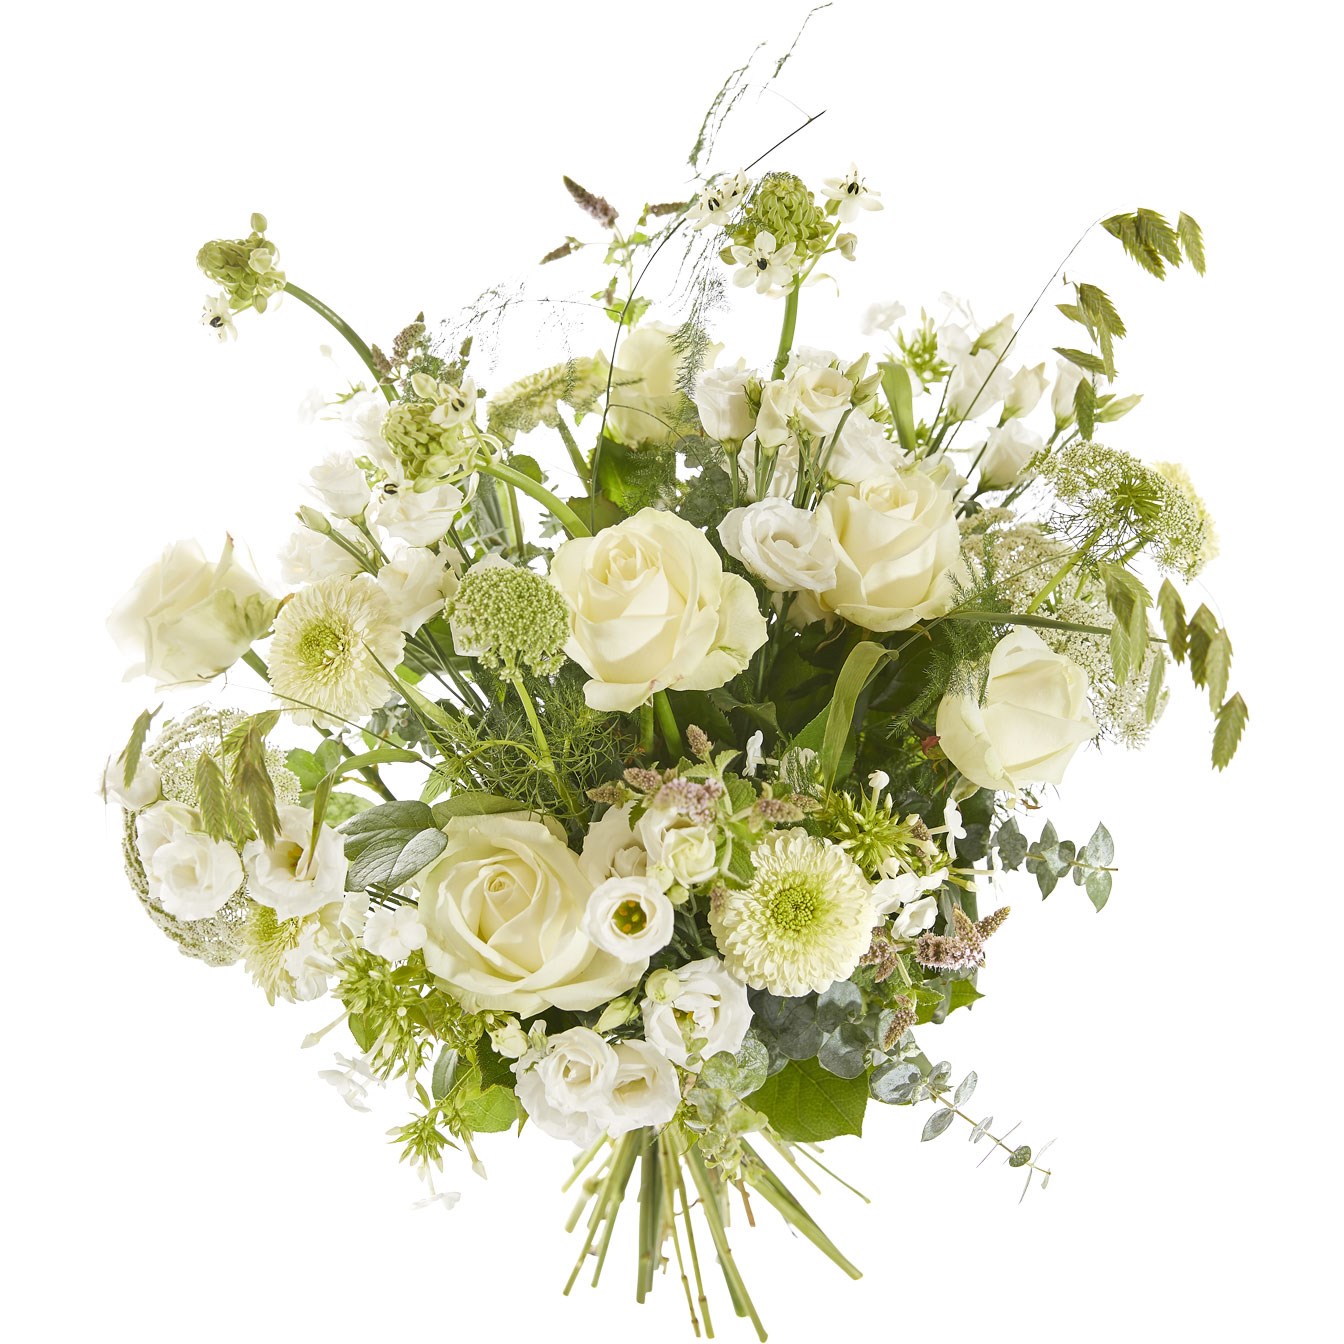 product image for Sympathy bouquet - Compassion